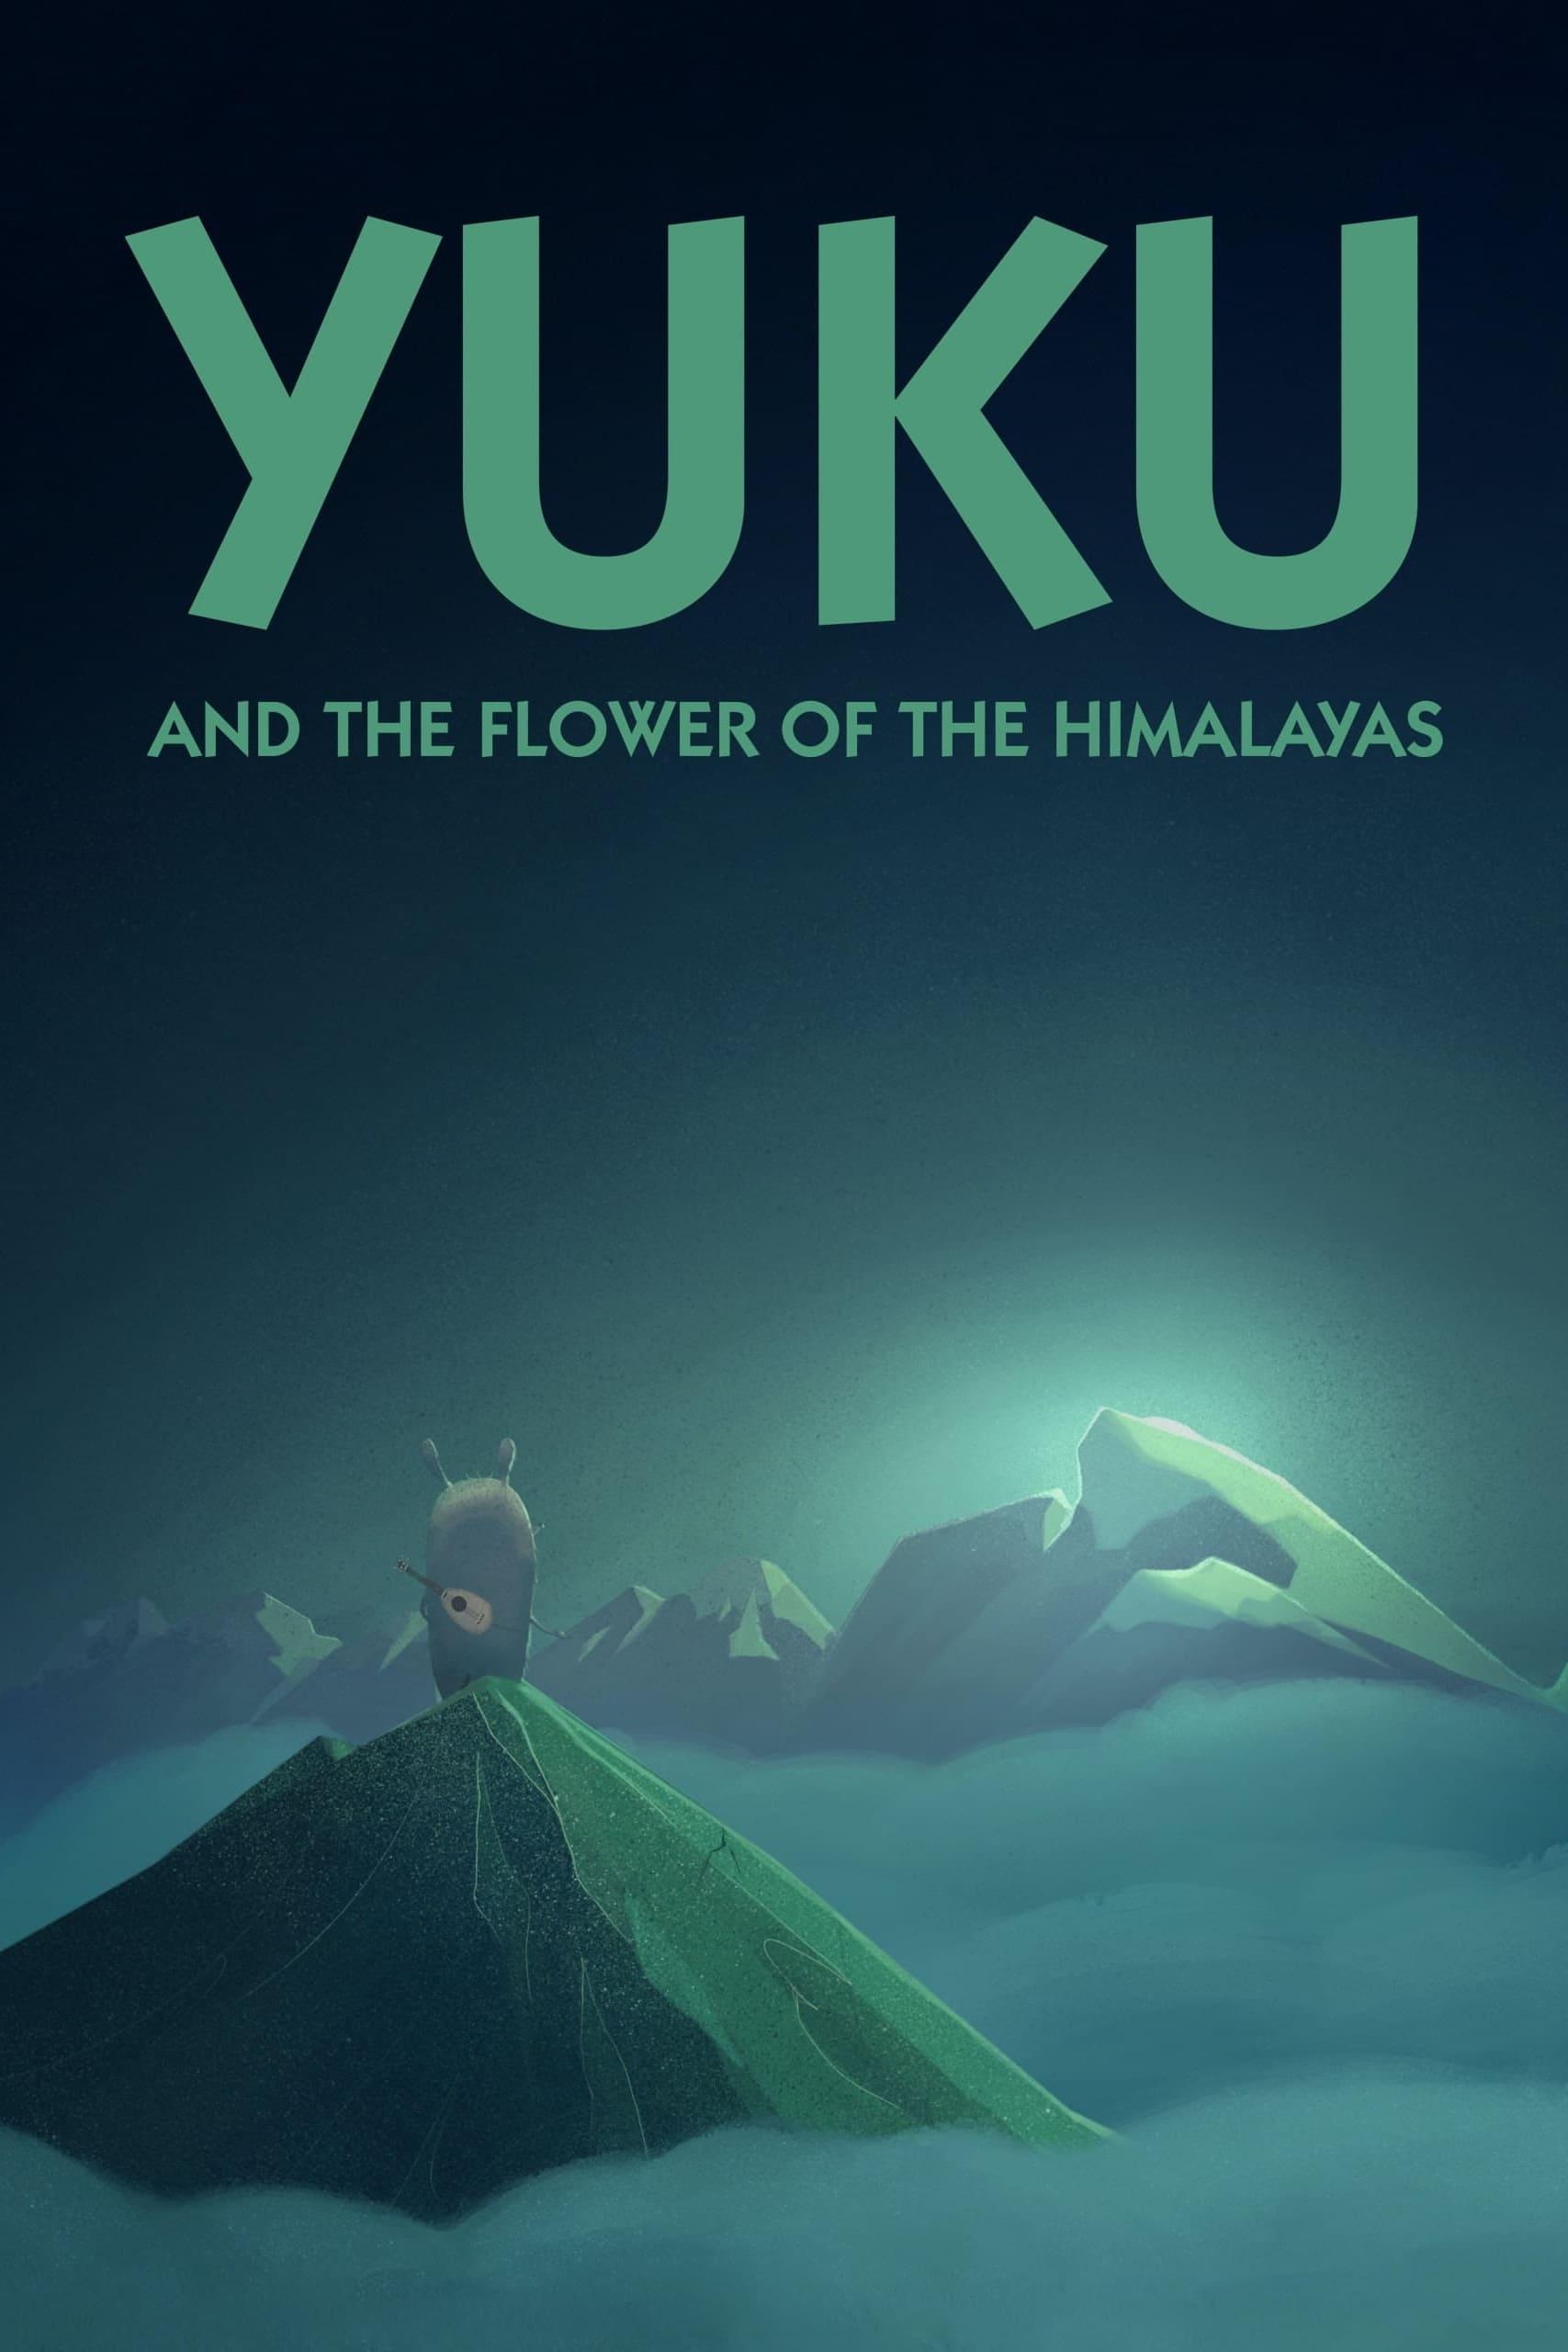 Yuku and the Himalayan Flower poster